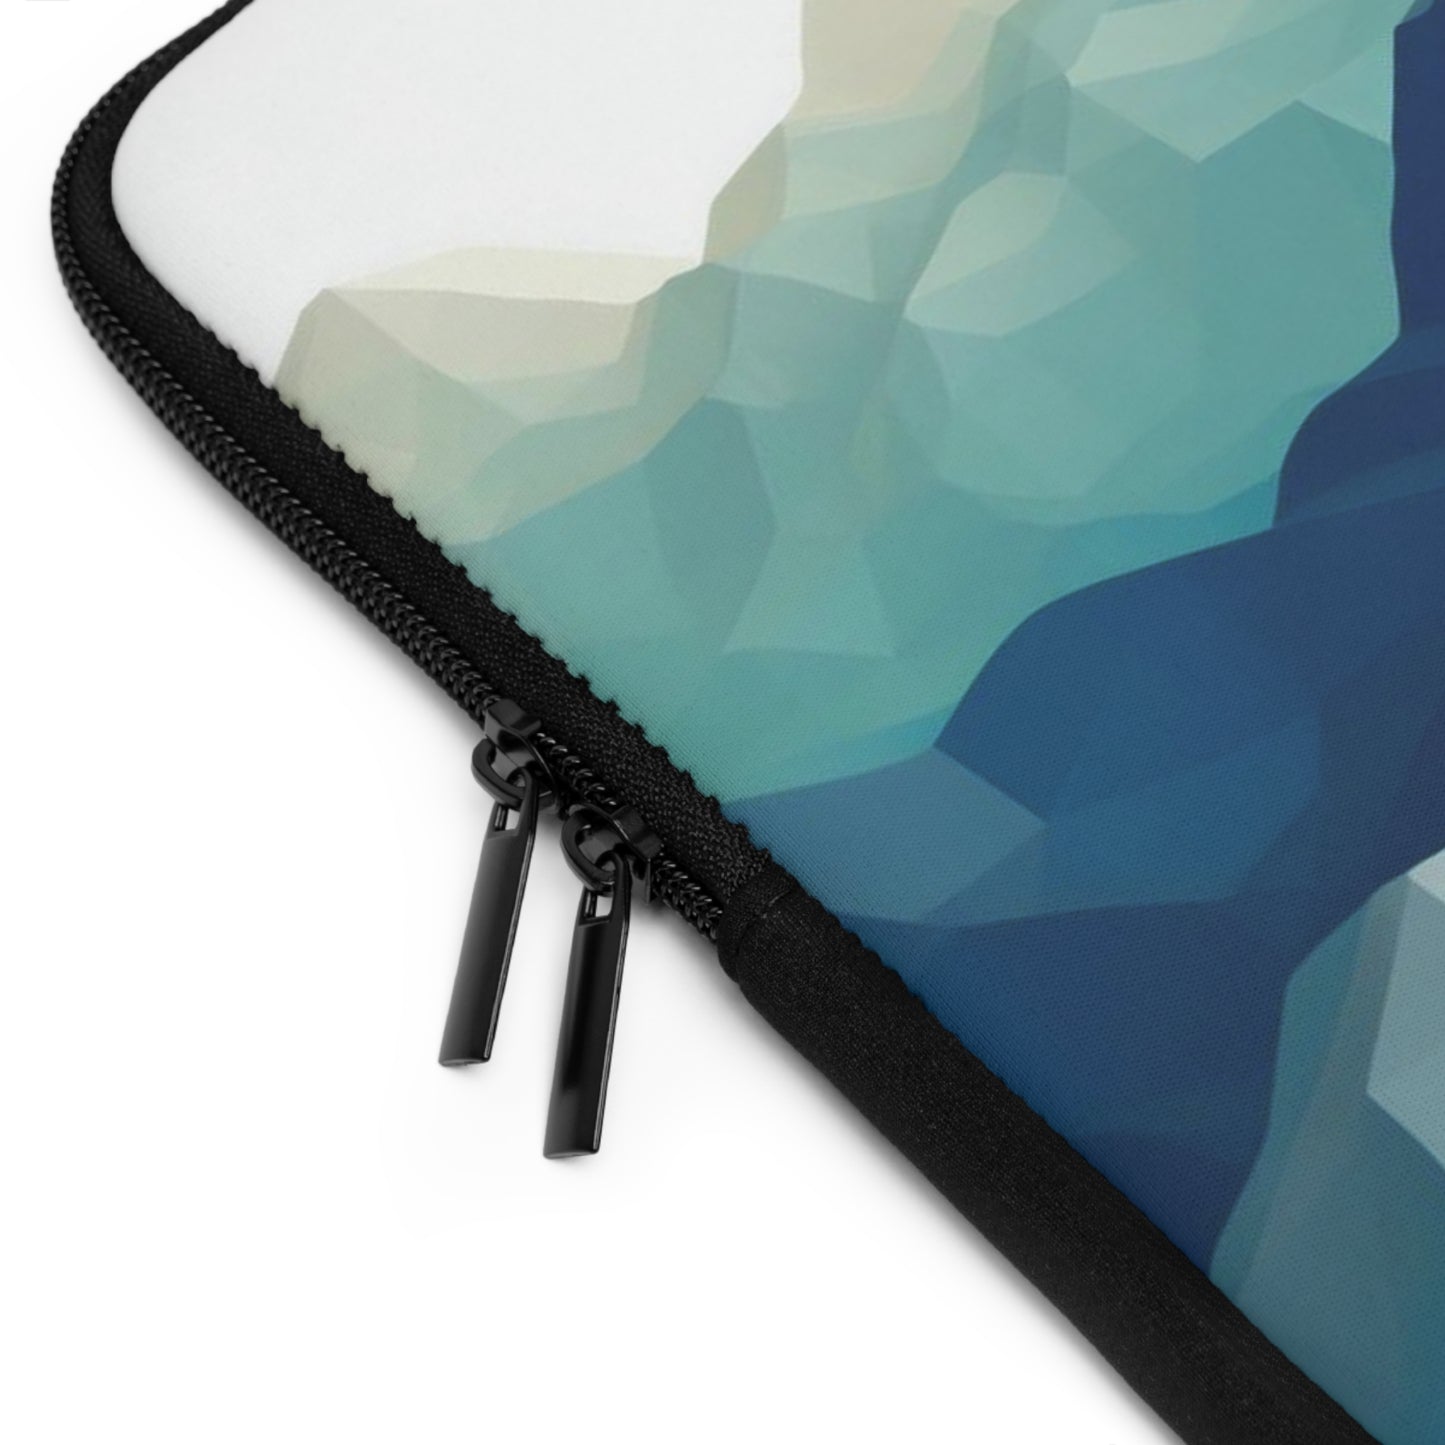 Geometric Mountains Tablet Sleeve, Mountain Landscape Laptop Sleeve, iPad Cover, Zipper Pouch, MacBook Protective Case, Laptop Bag